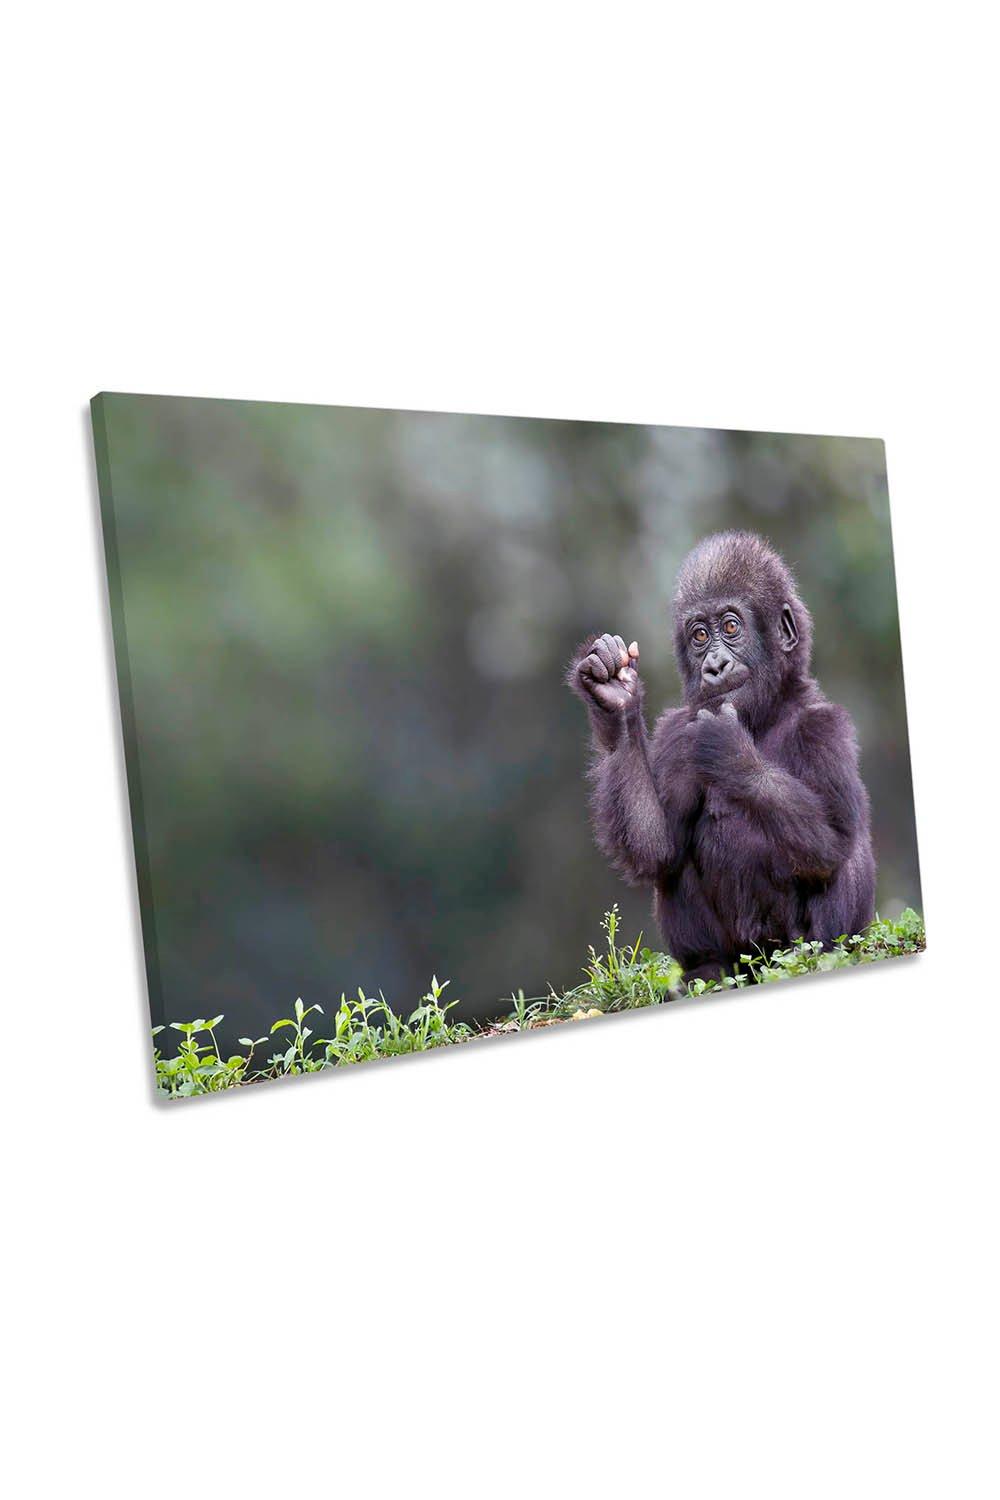 Baby Gorilla Wildlife Monkey Canvas Wall Art Picture Print